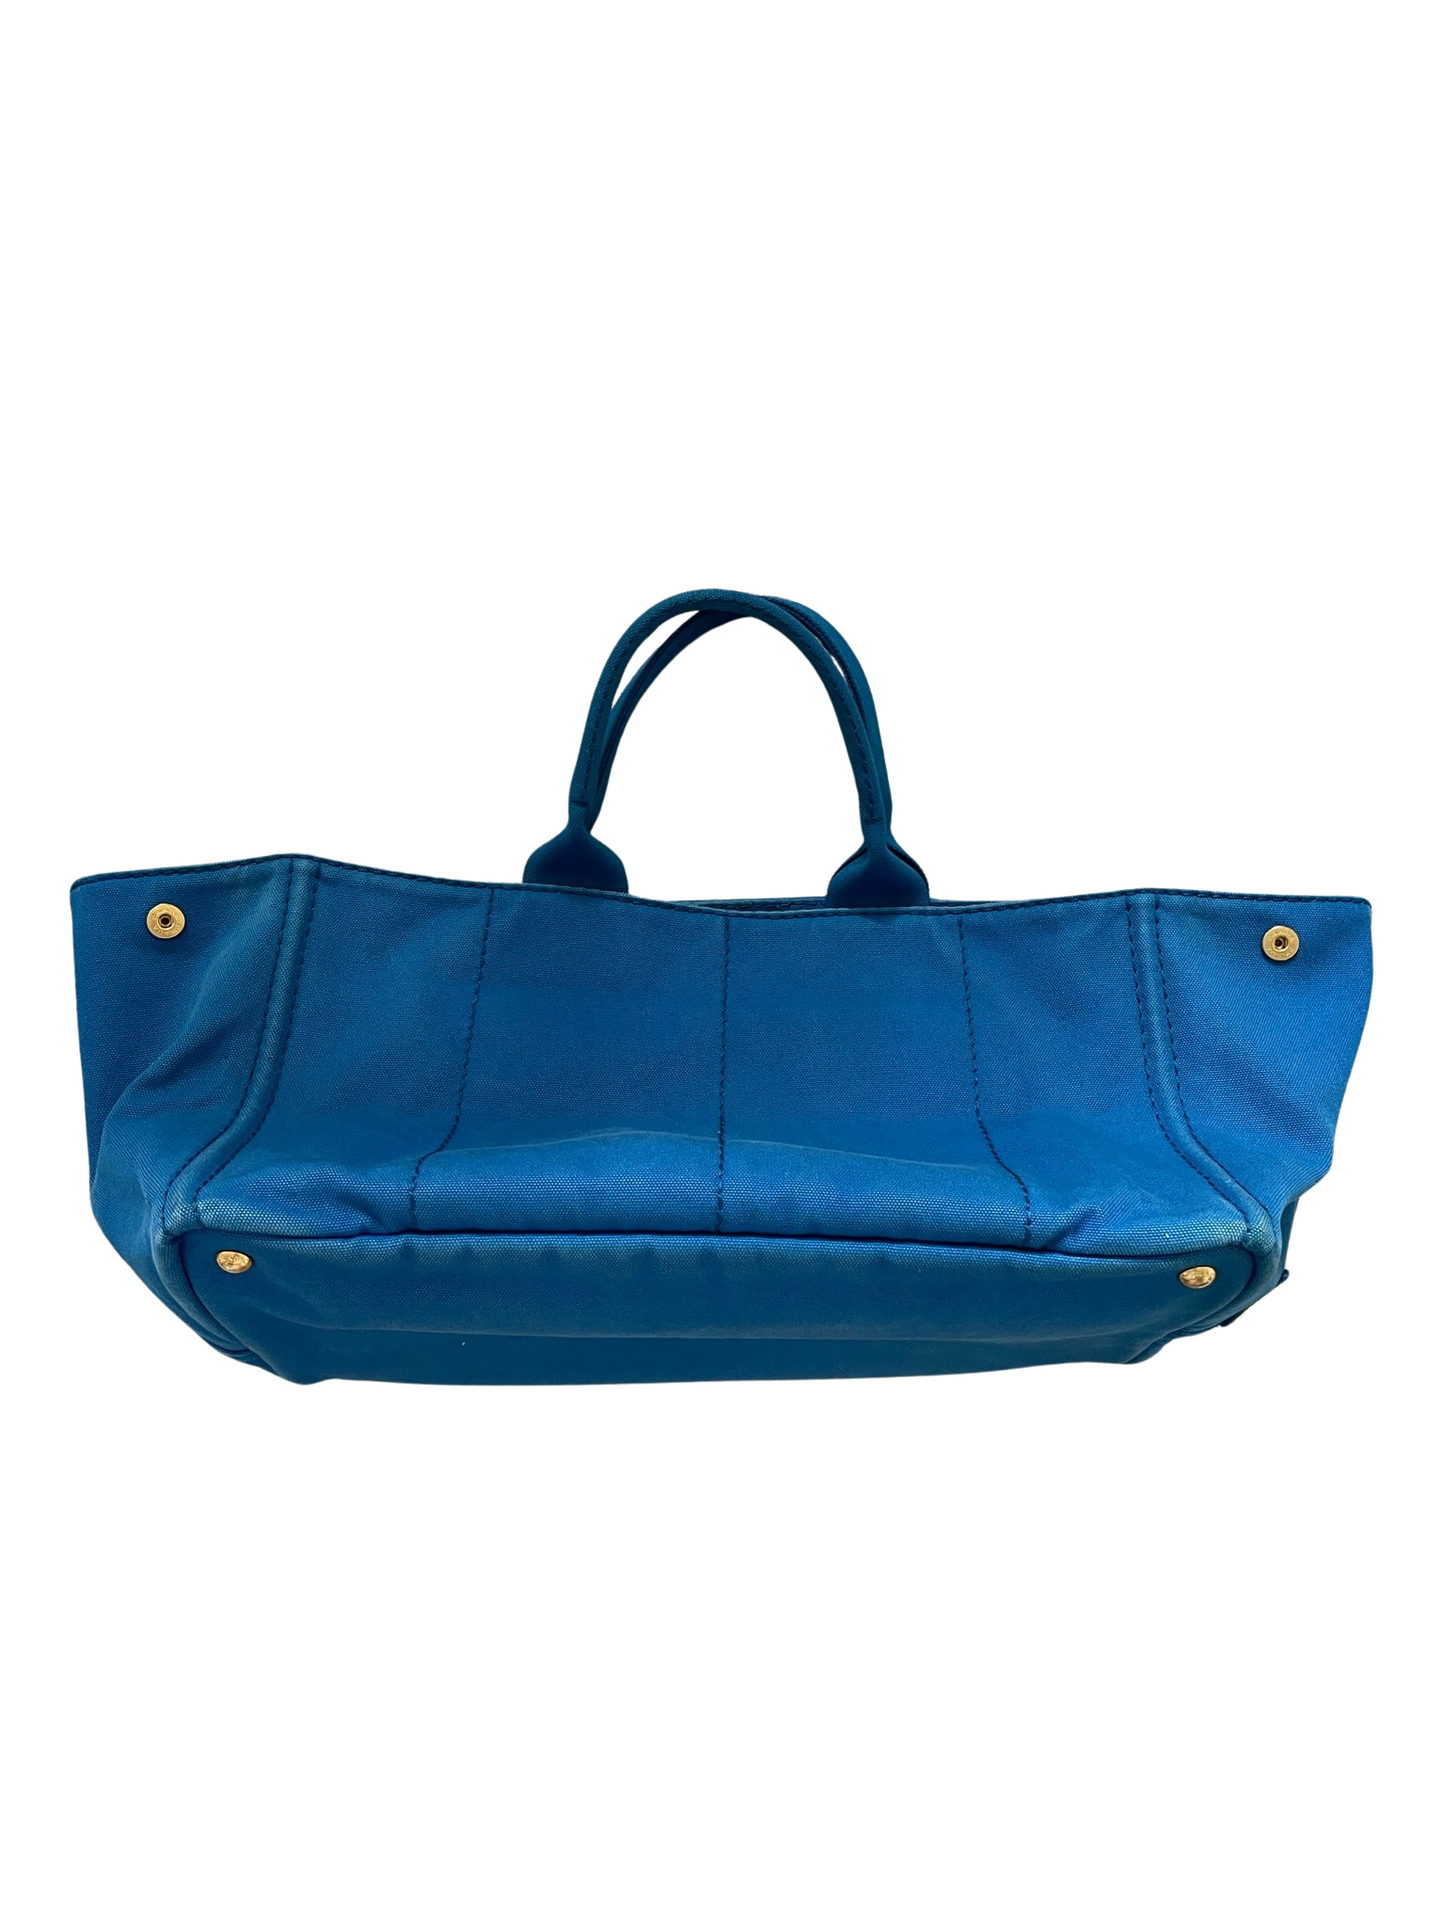 Prada Blue Canapa Canvas Tote Bag